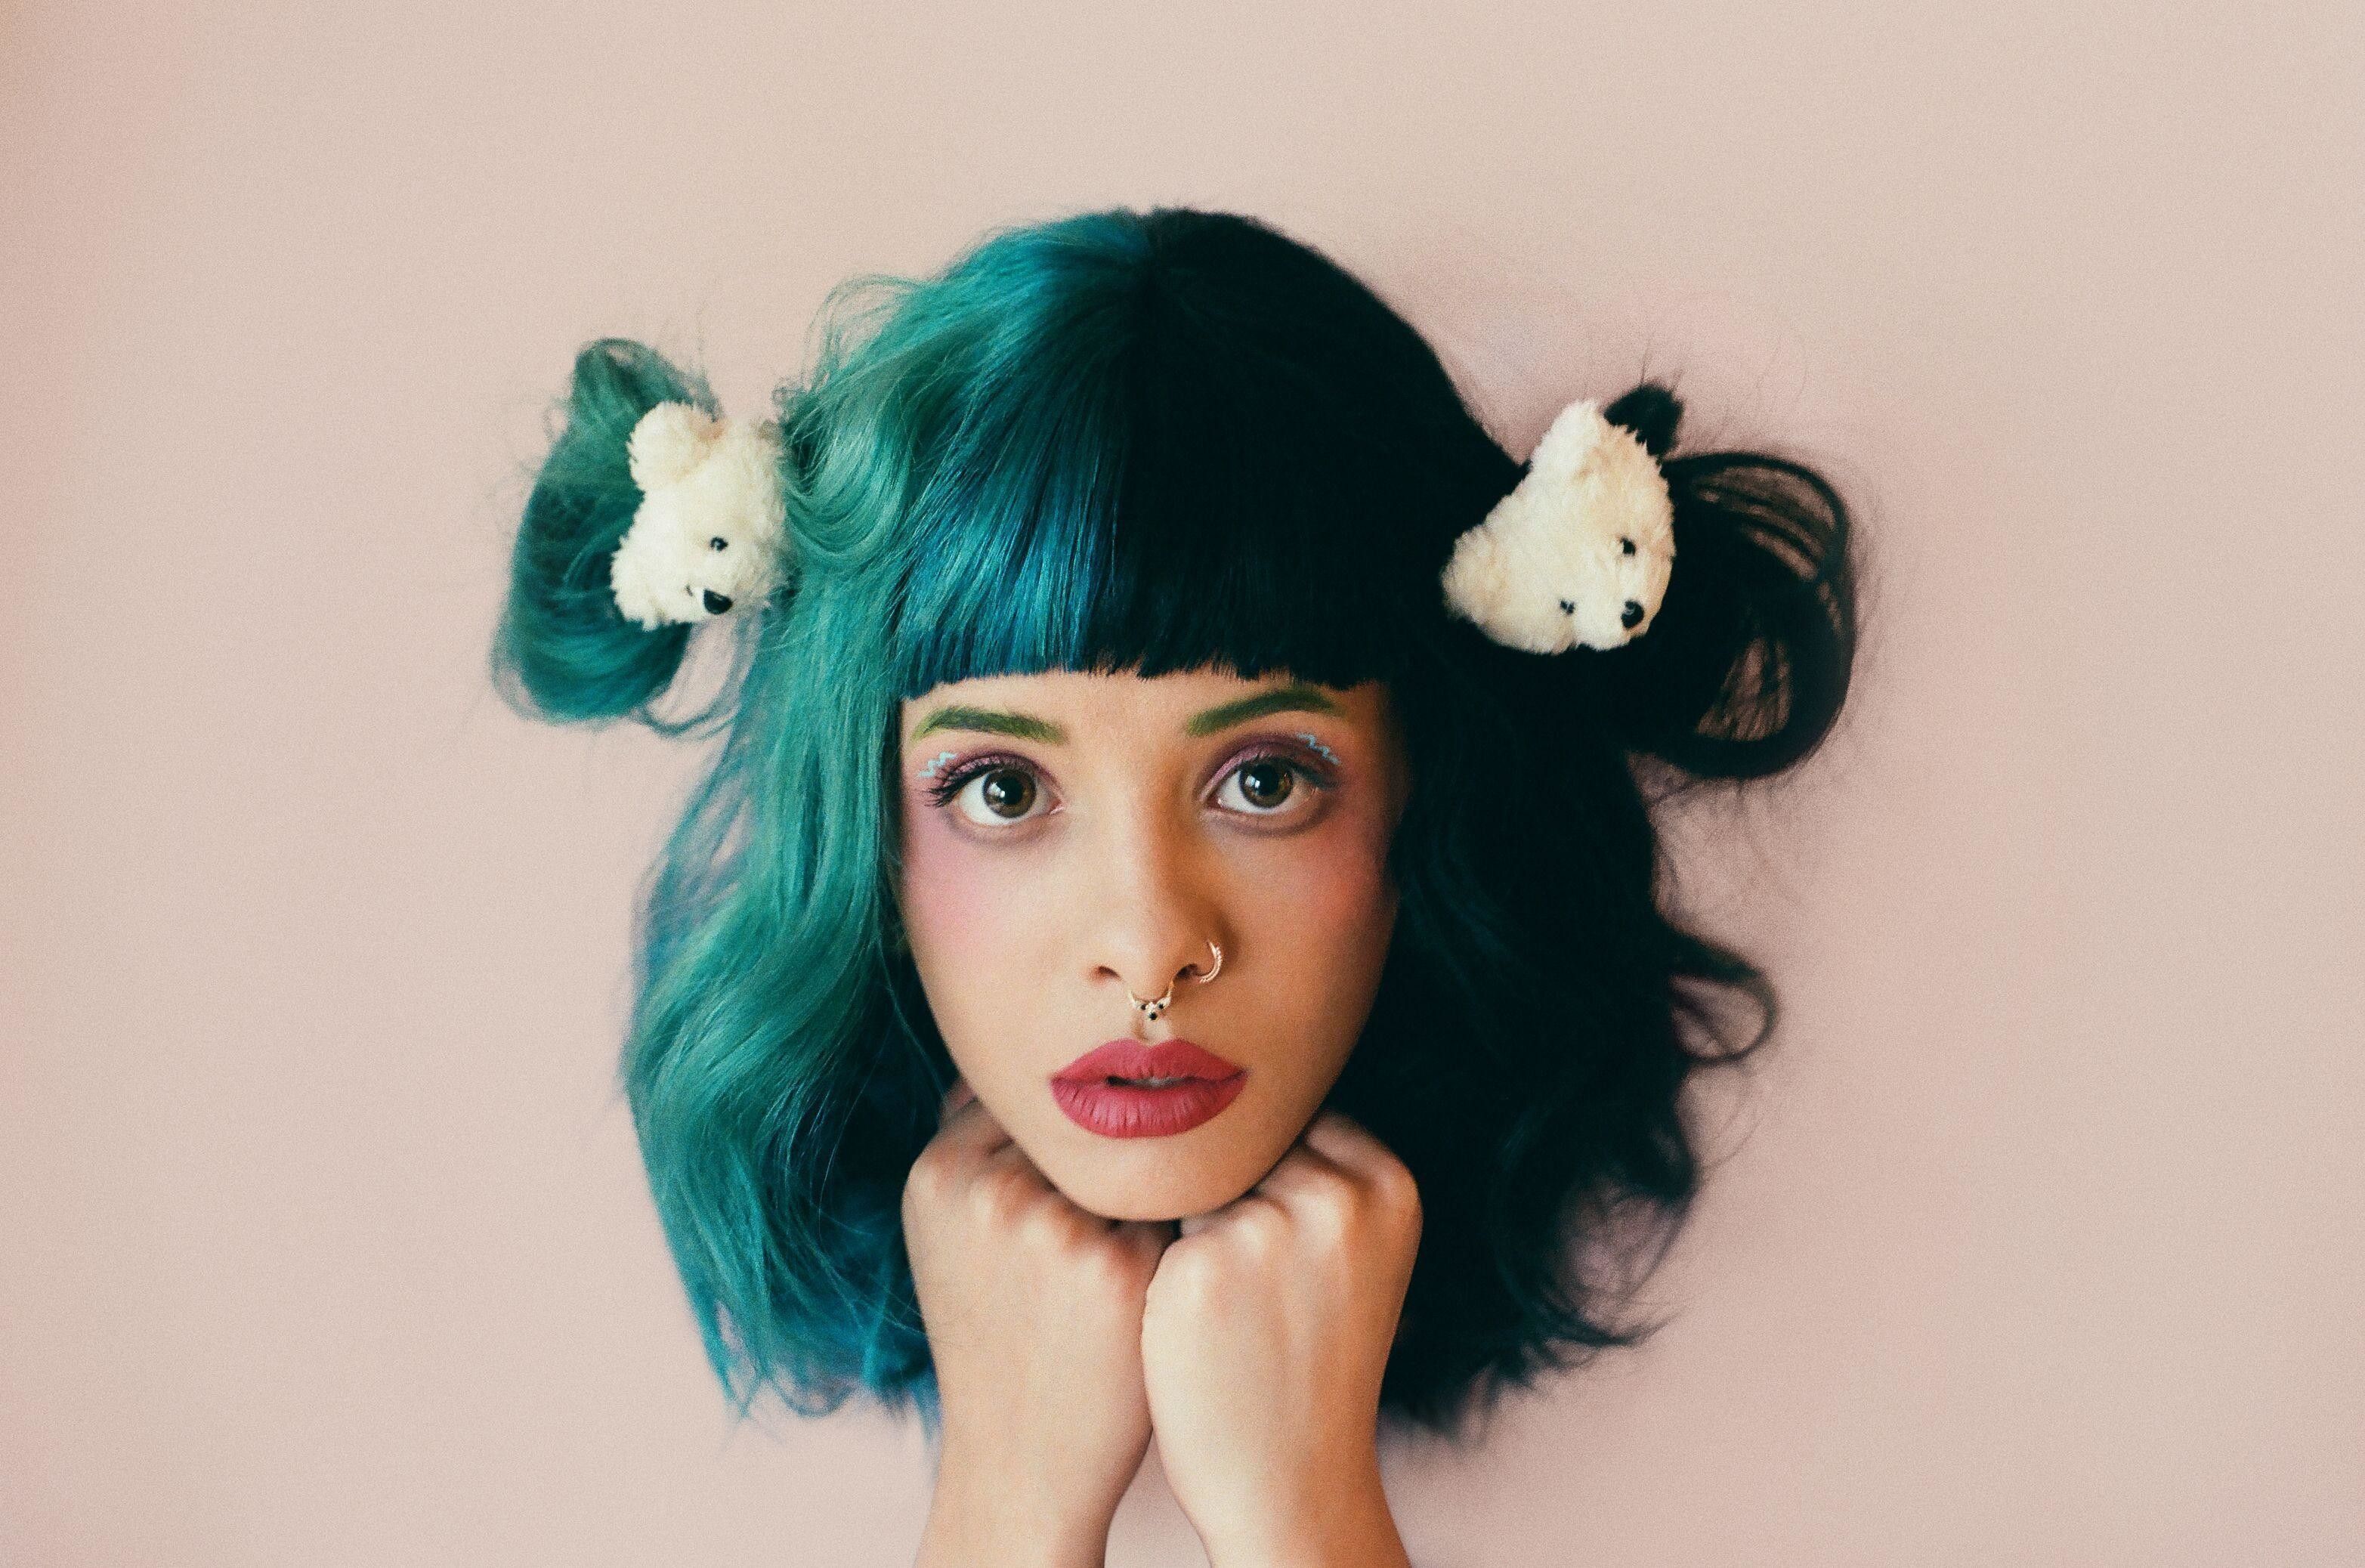 A woman with green hair and teddy bear buns - Melanie Martinez